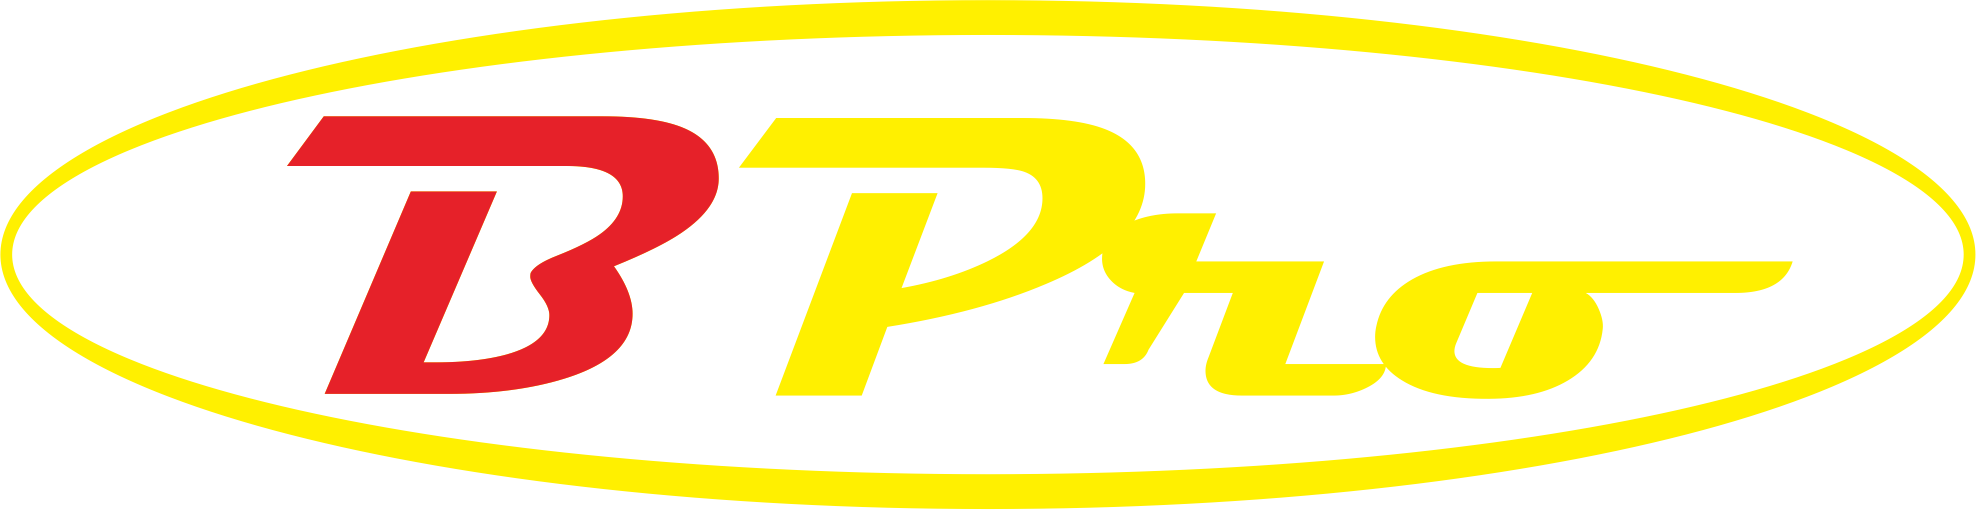 Radiator - Ama Pro Racing, Transparent background PNG HD thumbnail